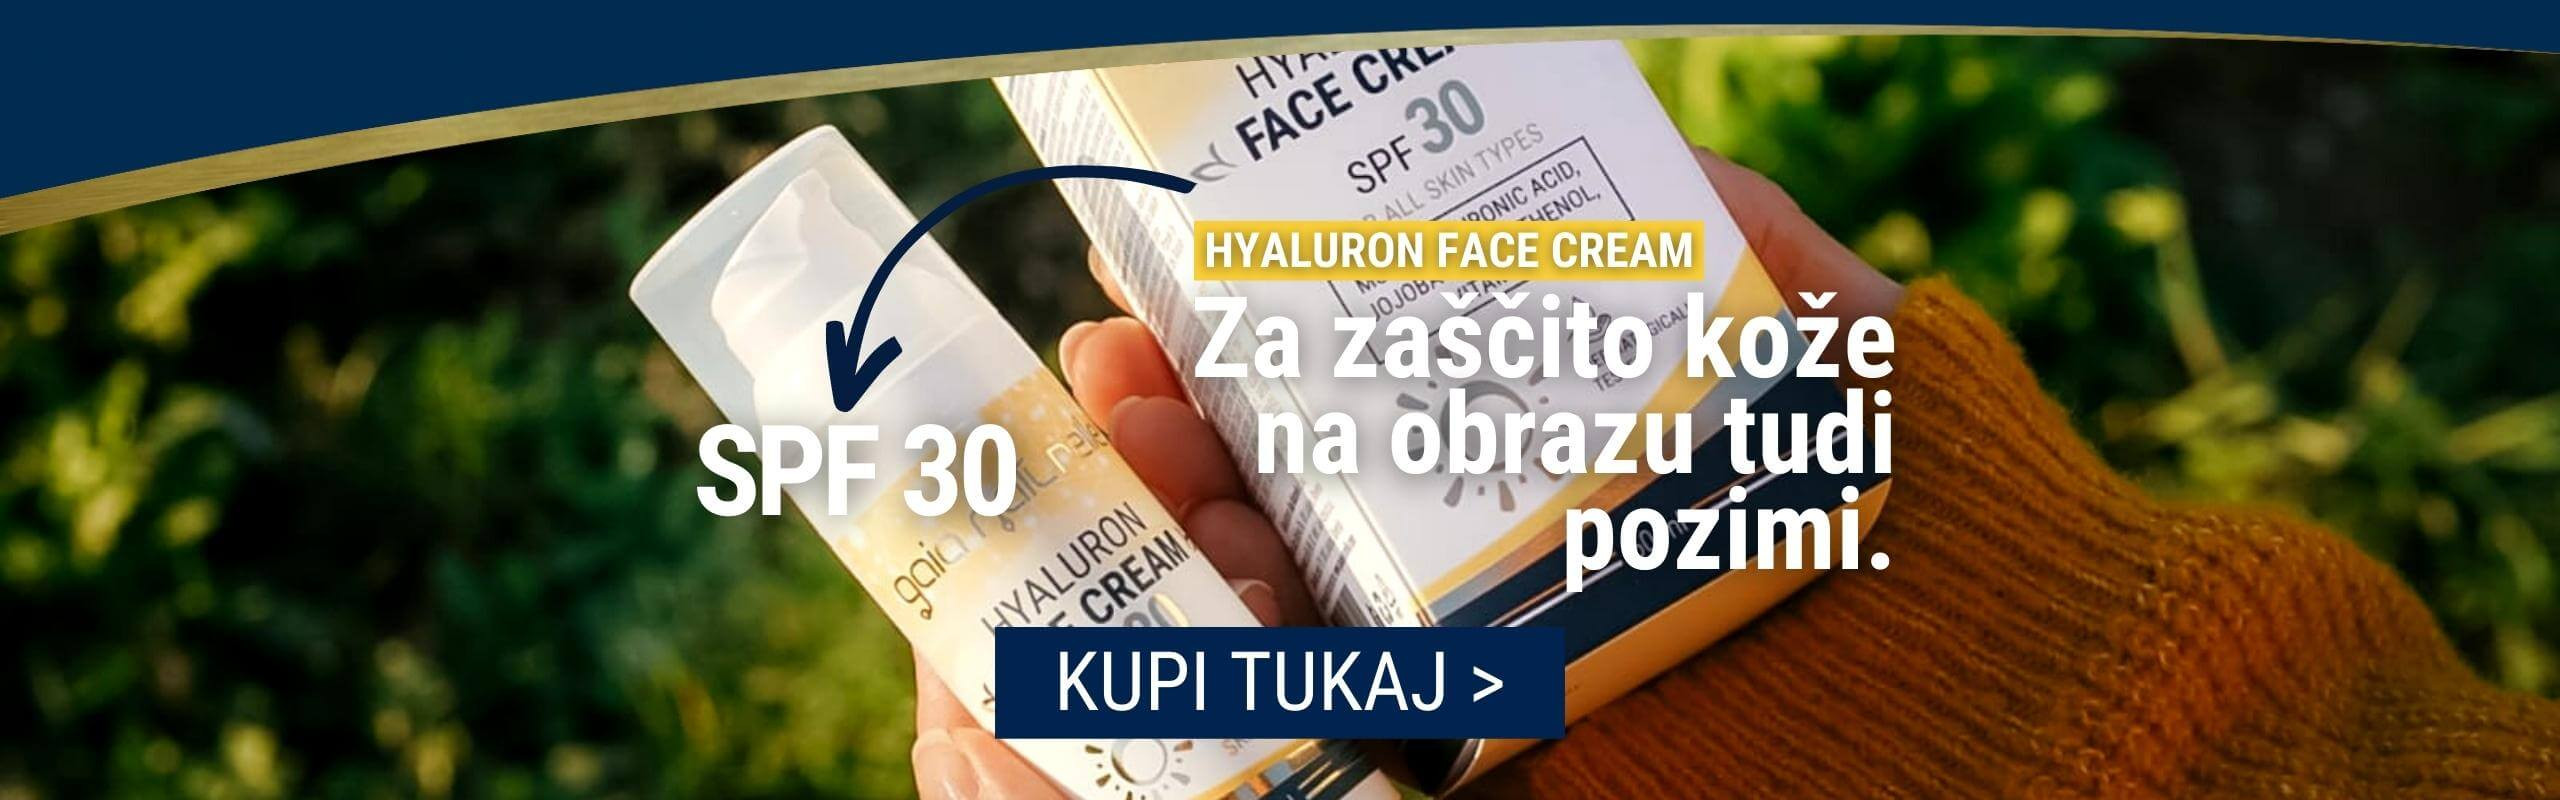 Hyaluron Face Cream SPF 30